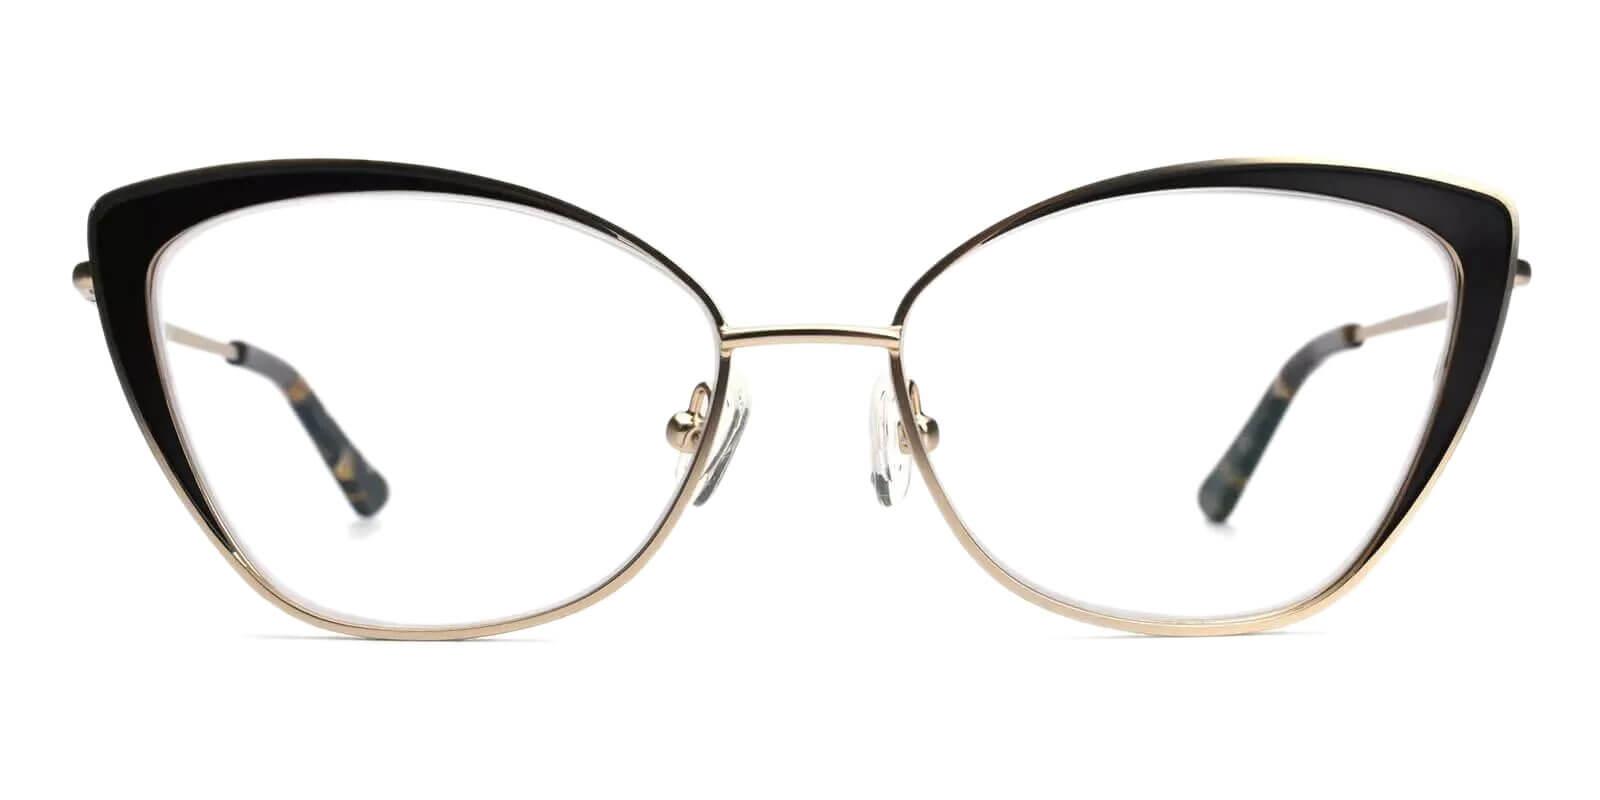 Paisley Gold Metal Eyeglasses , NosePads , SpringHinges Frames from ABBE Glasses